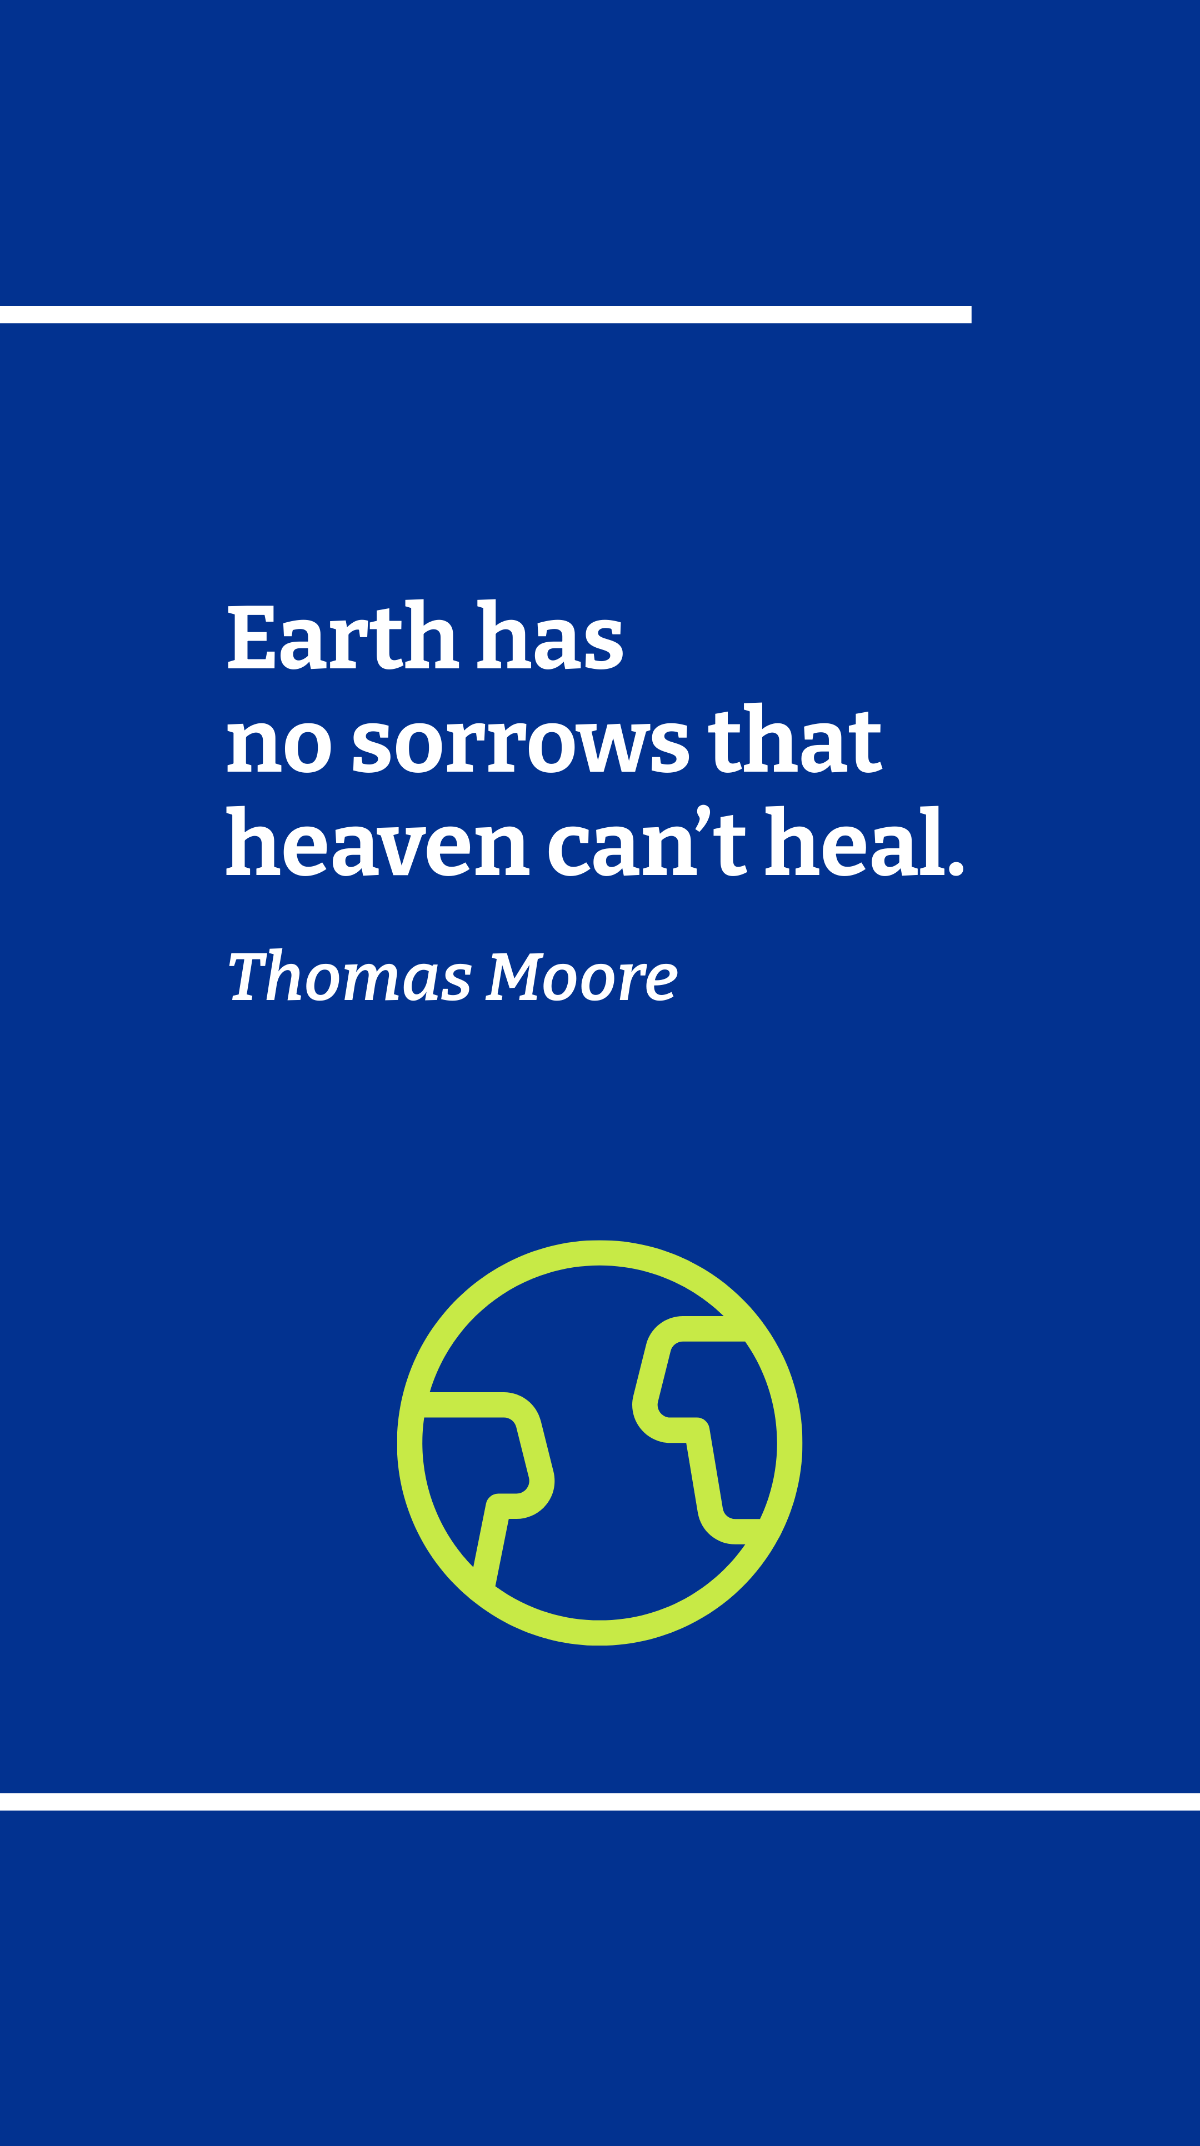 Thomas Moore - Earth has no sorrows that heaven can’t heal.